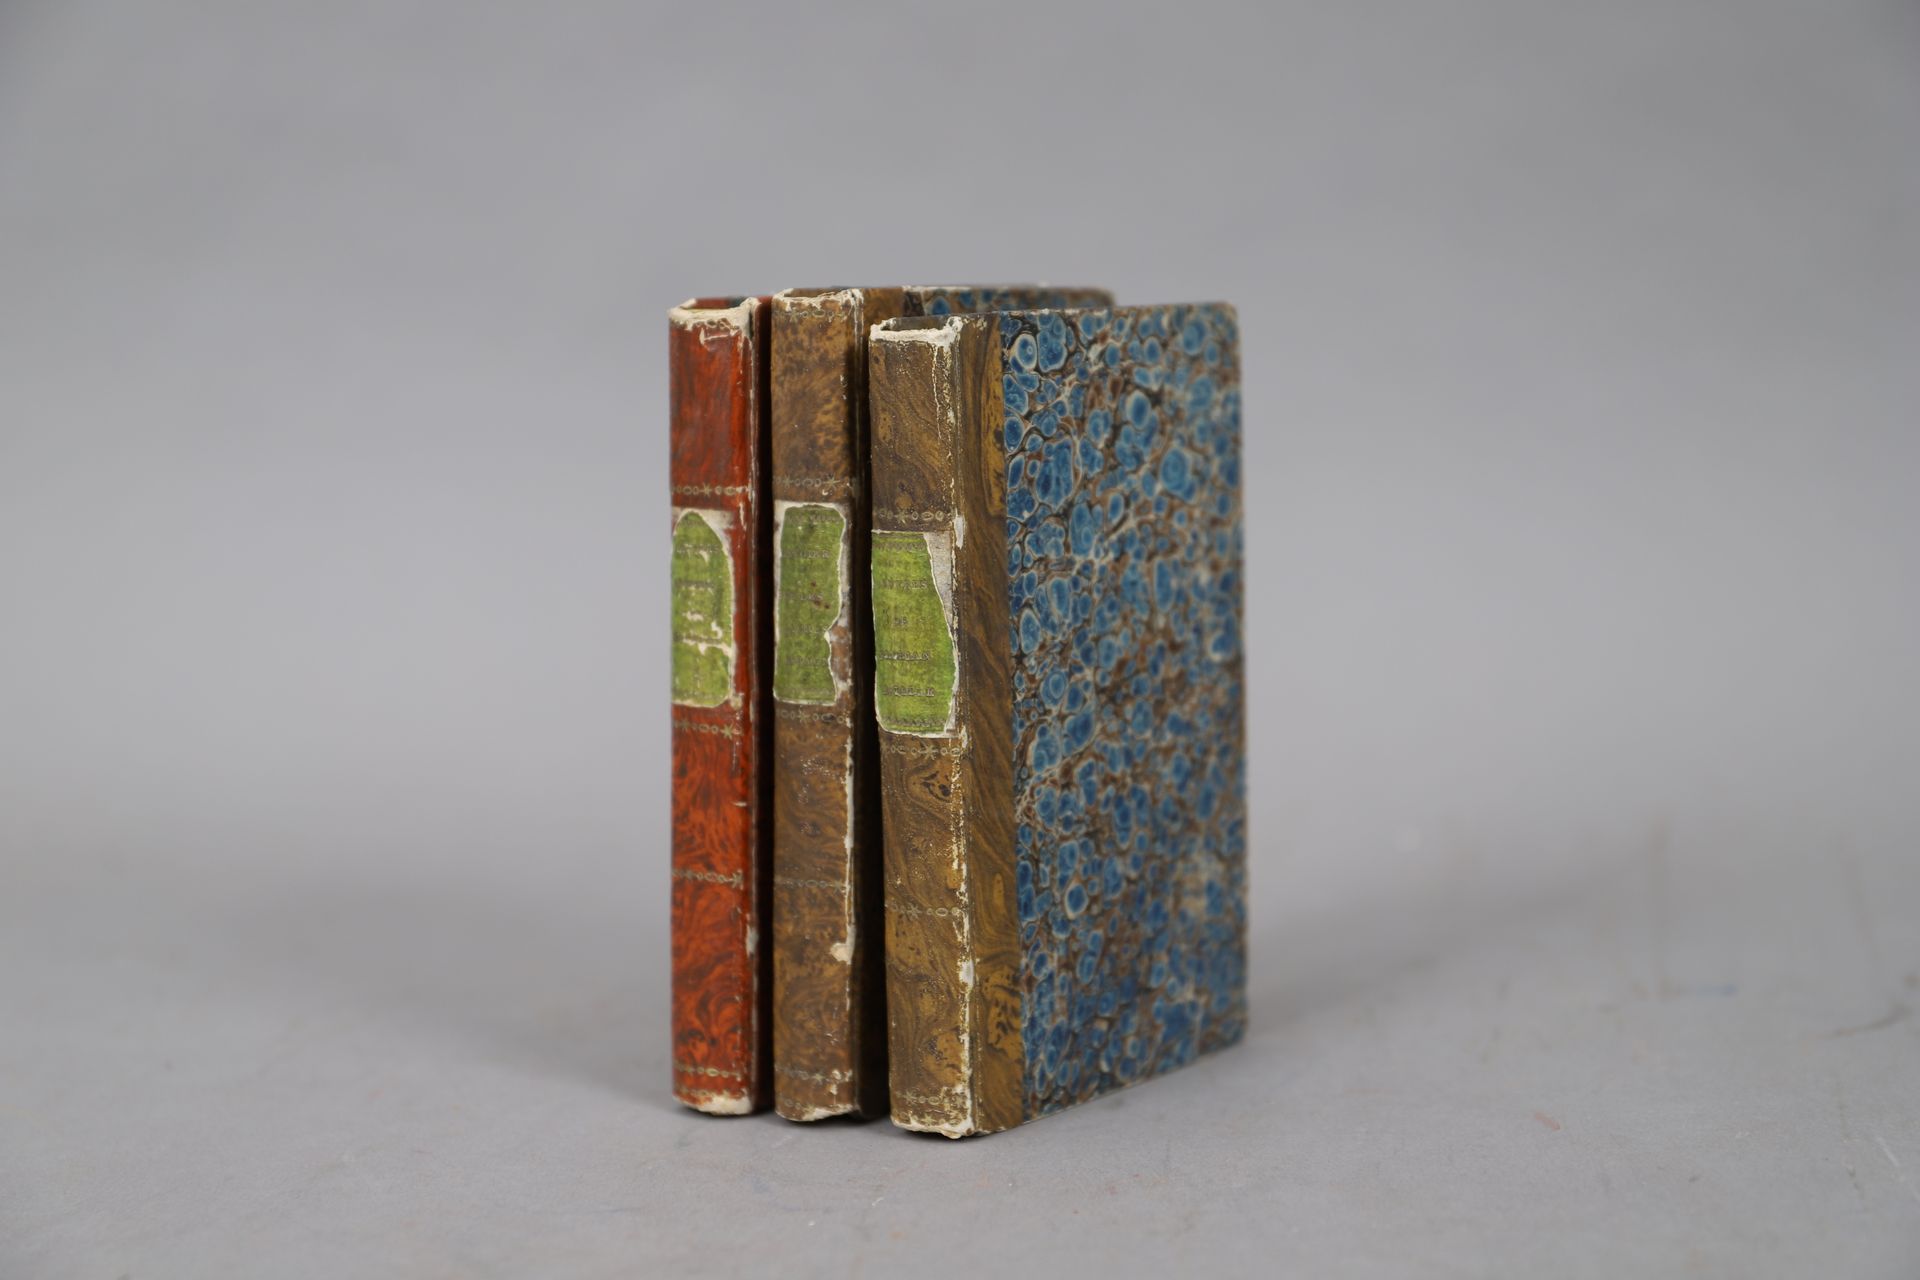 Null Obras de FLORIAN

3 volúmenes 

1820.